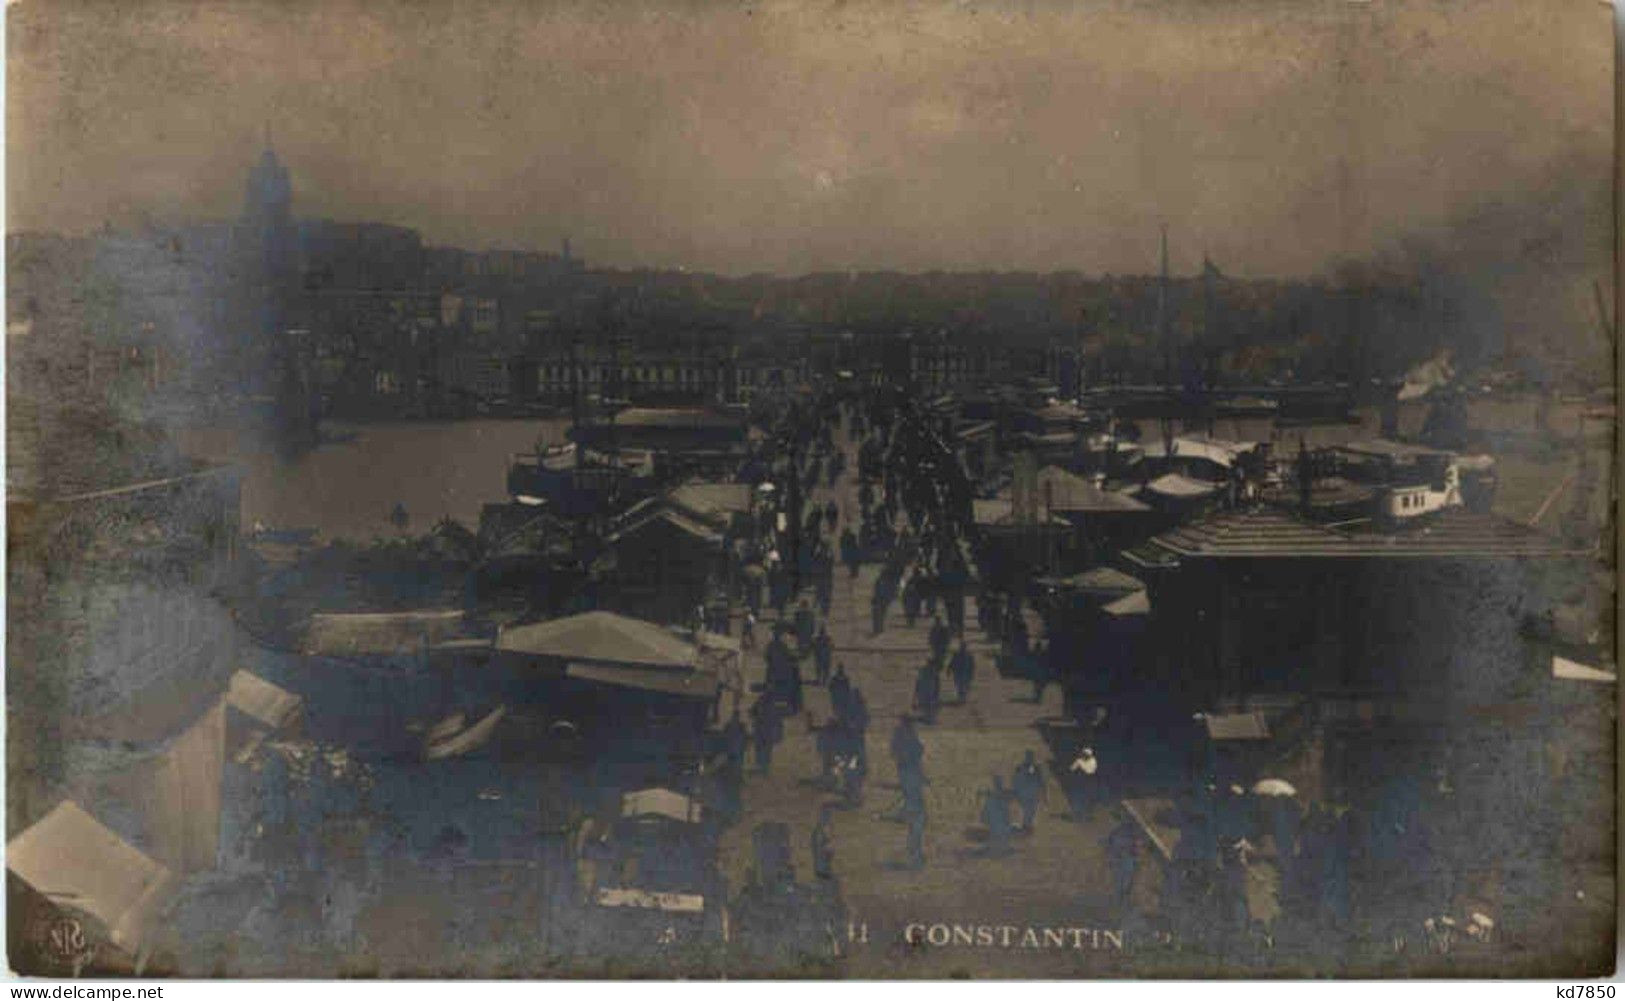 Constantinople - Turkey